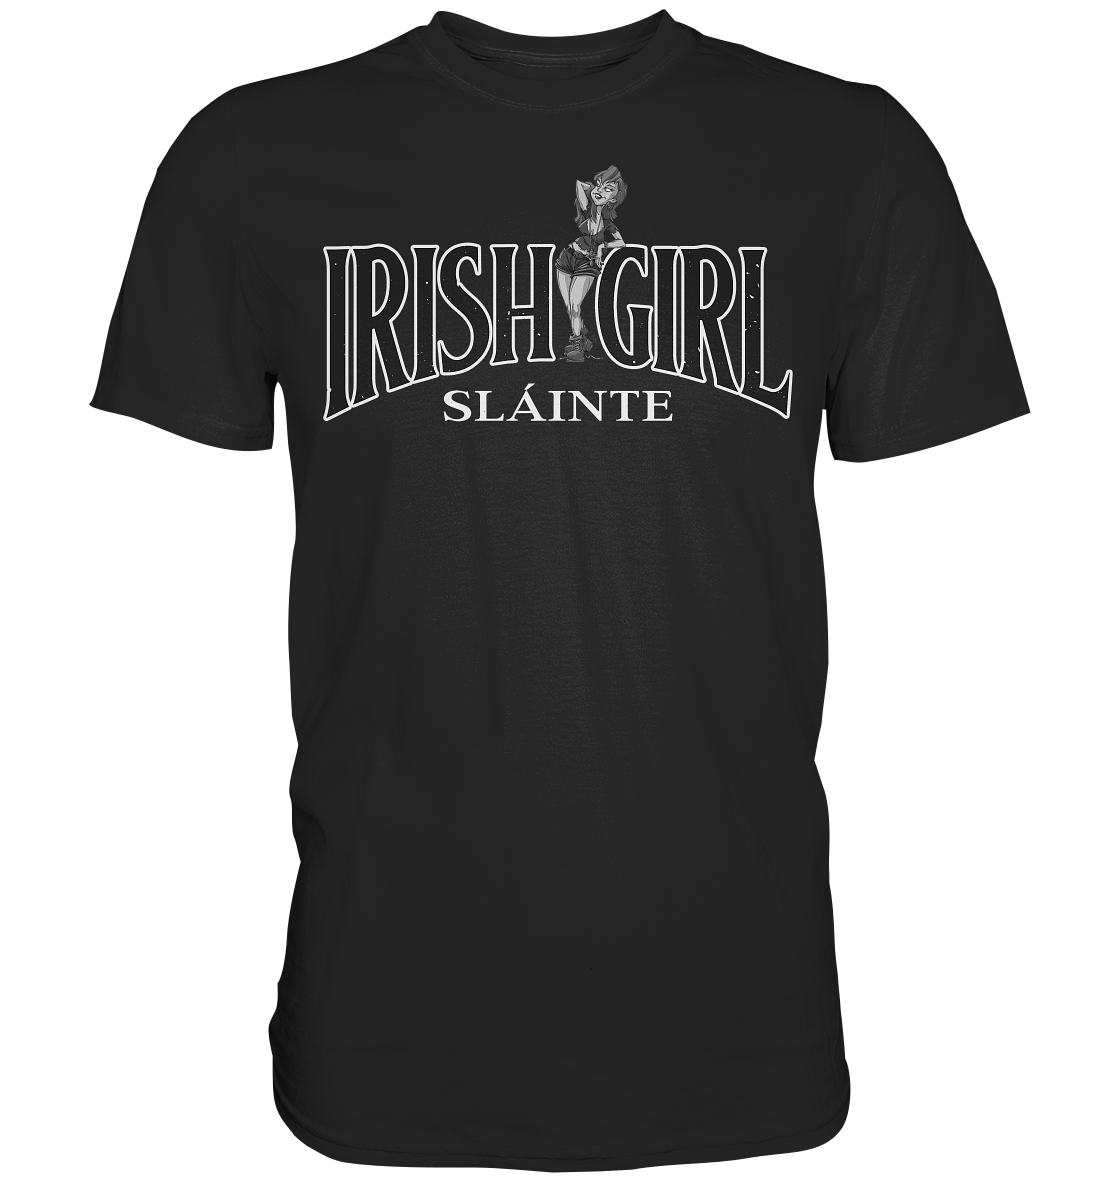 Irish Girl "Sláinte" - Premium Shirt